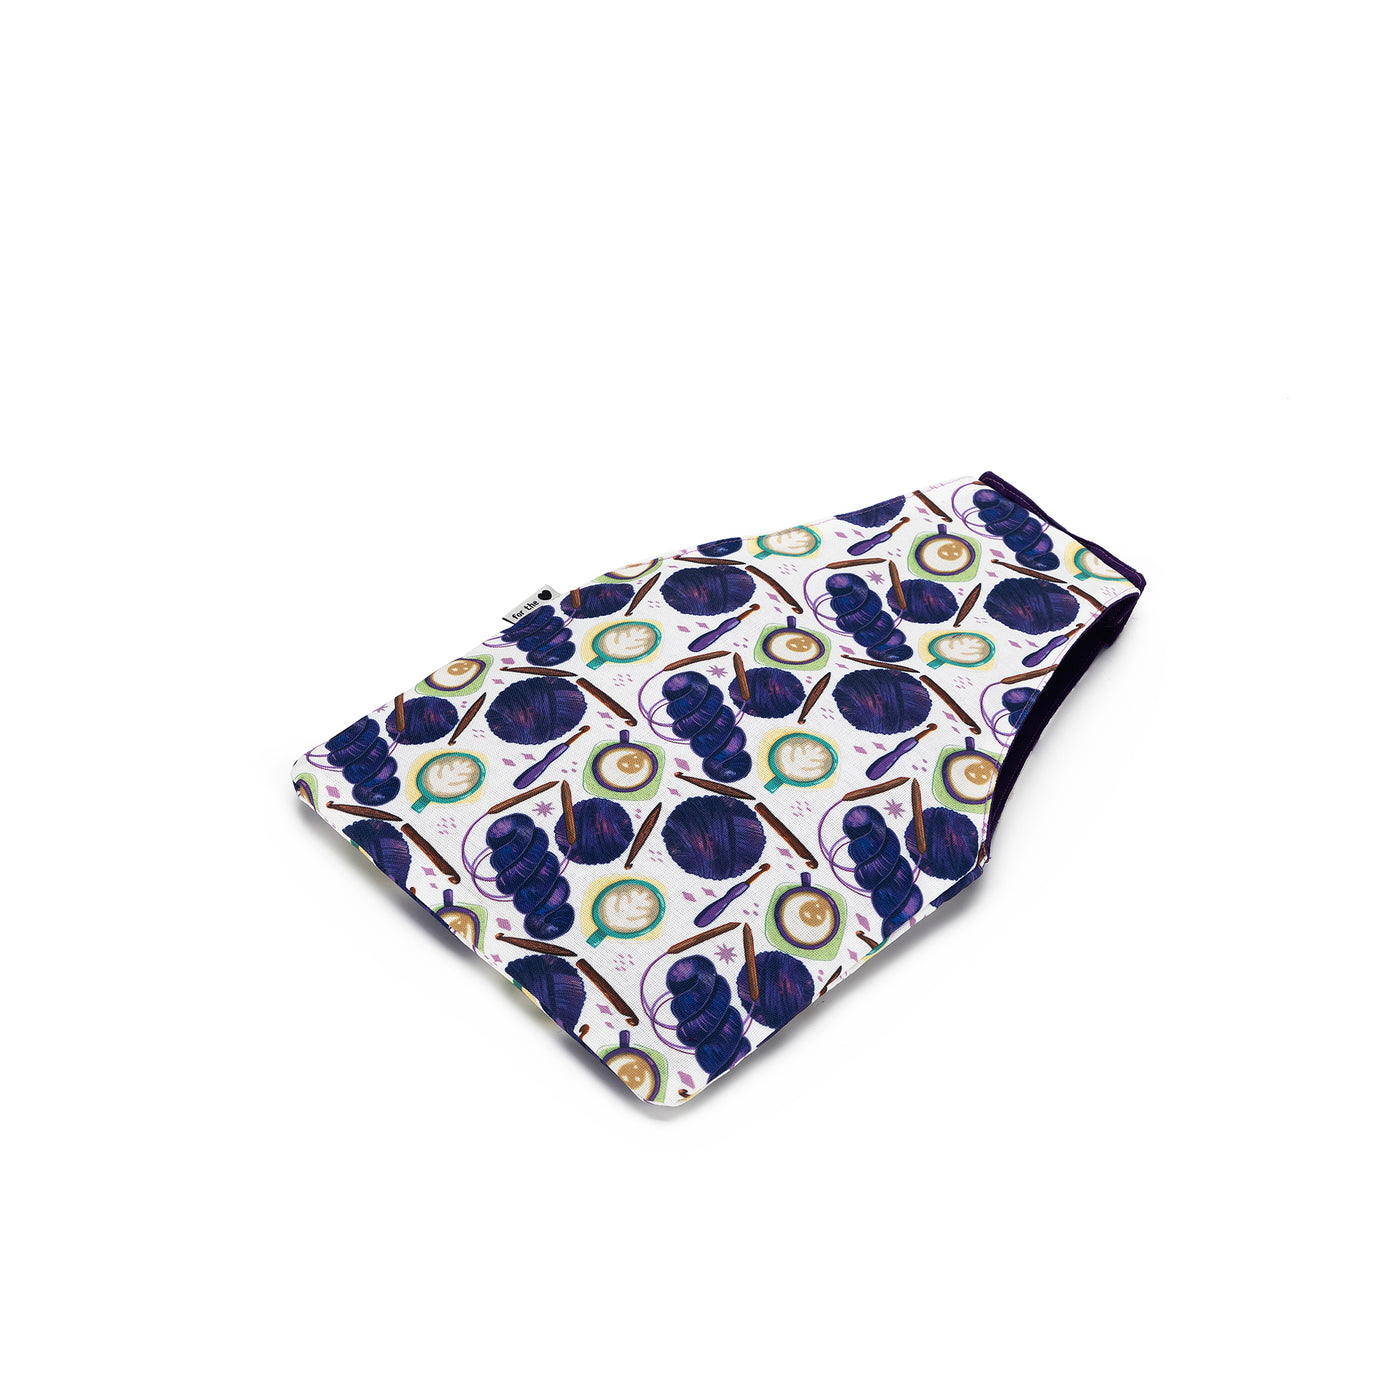 Nora Wrist Bag | Coffee and Yarn Purple Fabric Print (PREORDER)